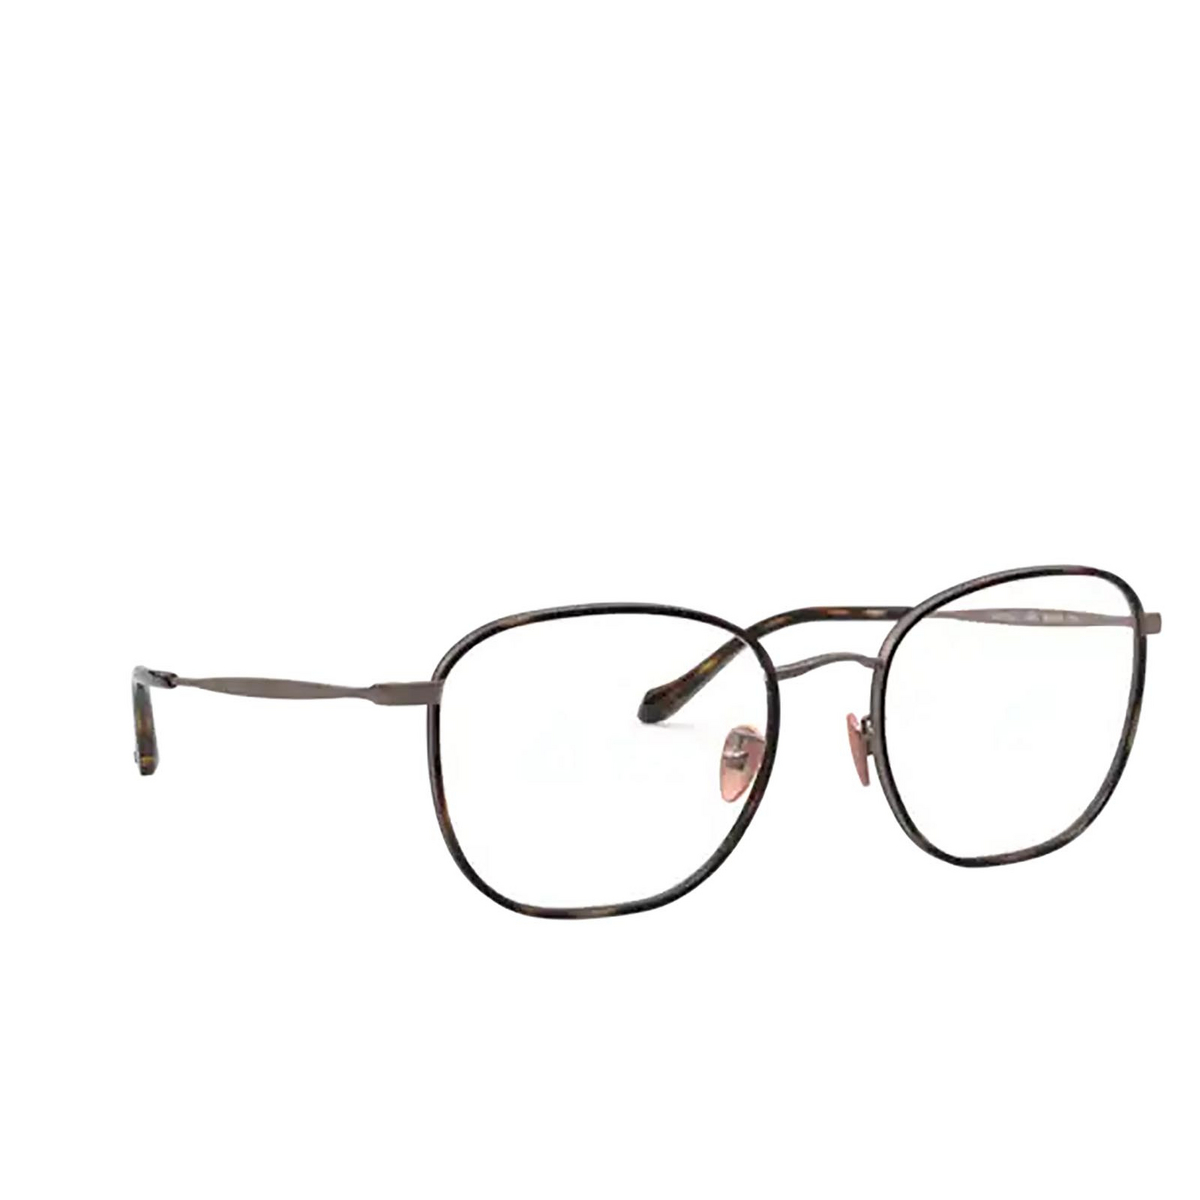 Giorgio Armani® Square Eyeglasses: AR5105J color Brown Havana / Bronze 3006 - three-quarters view.